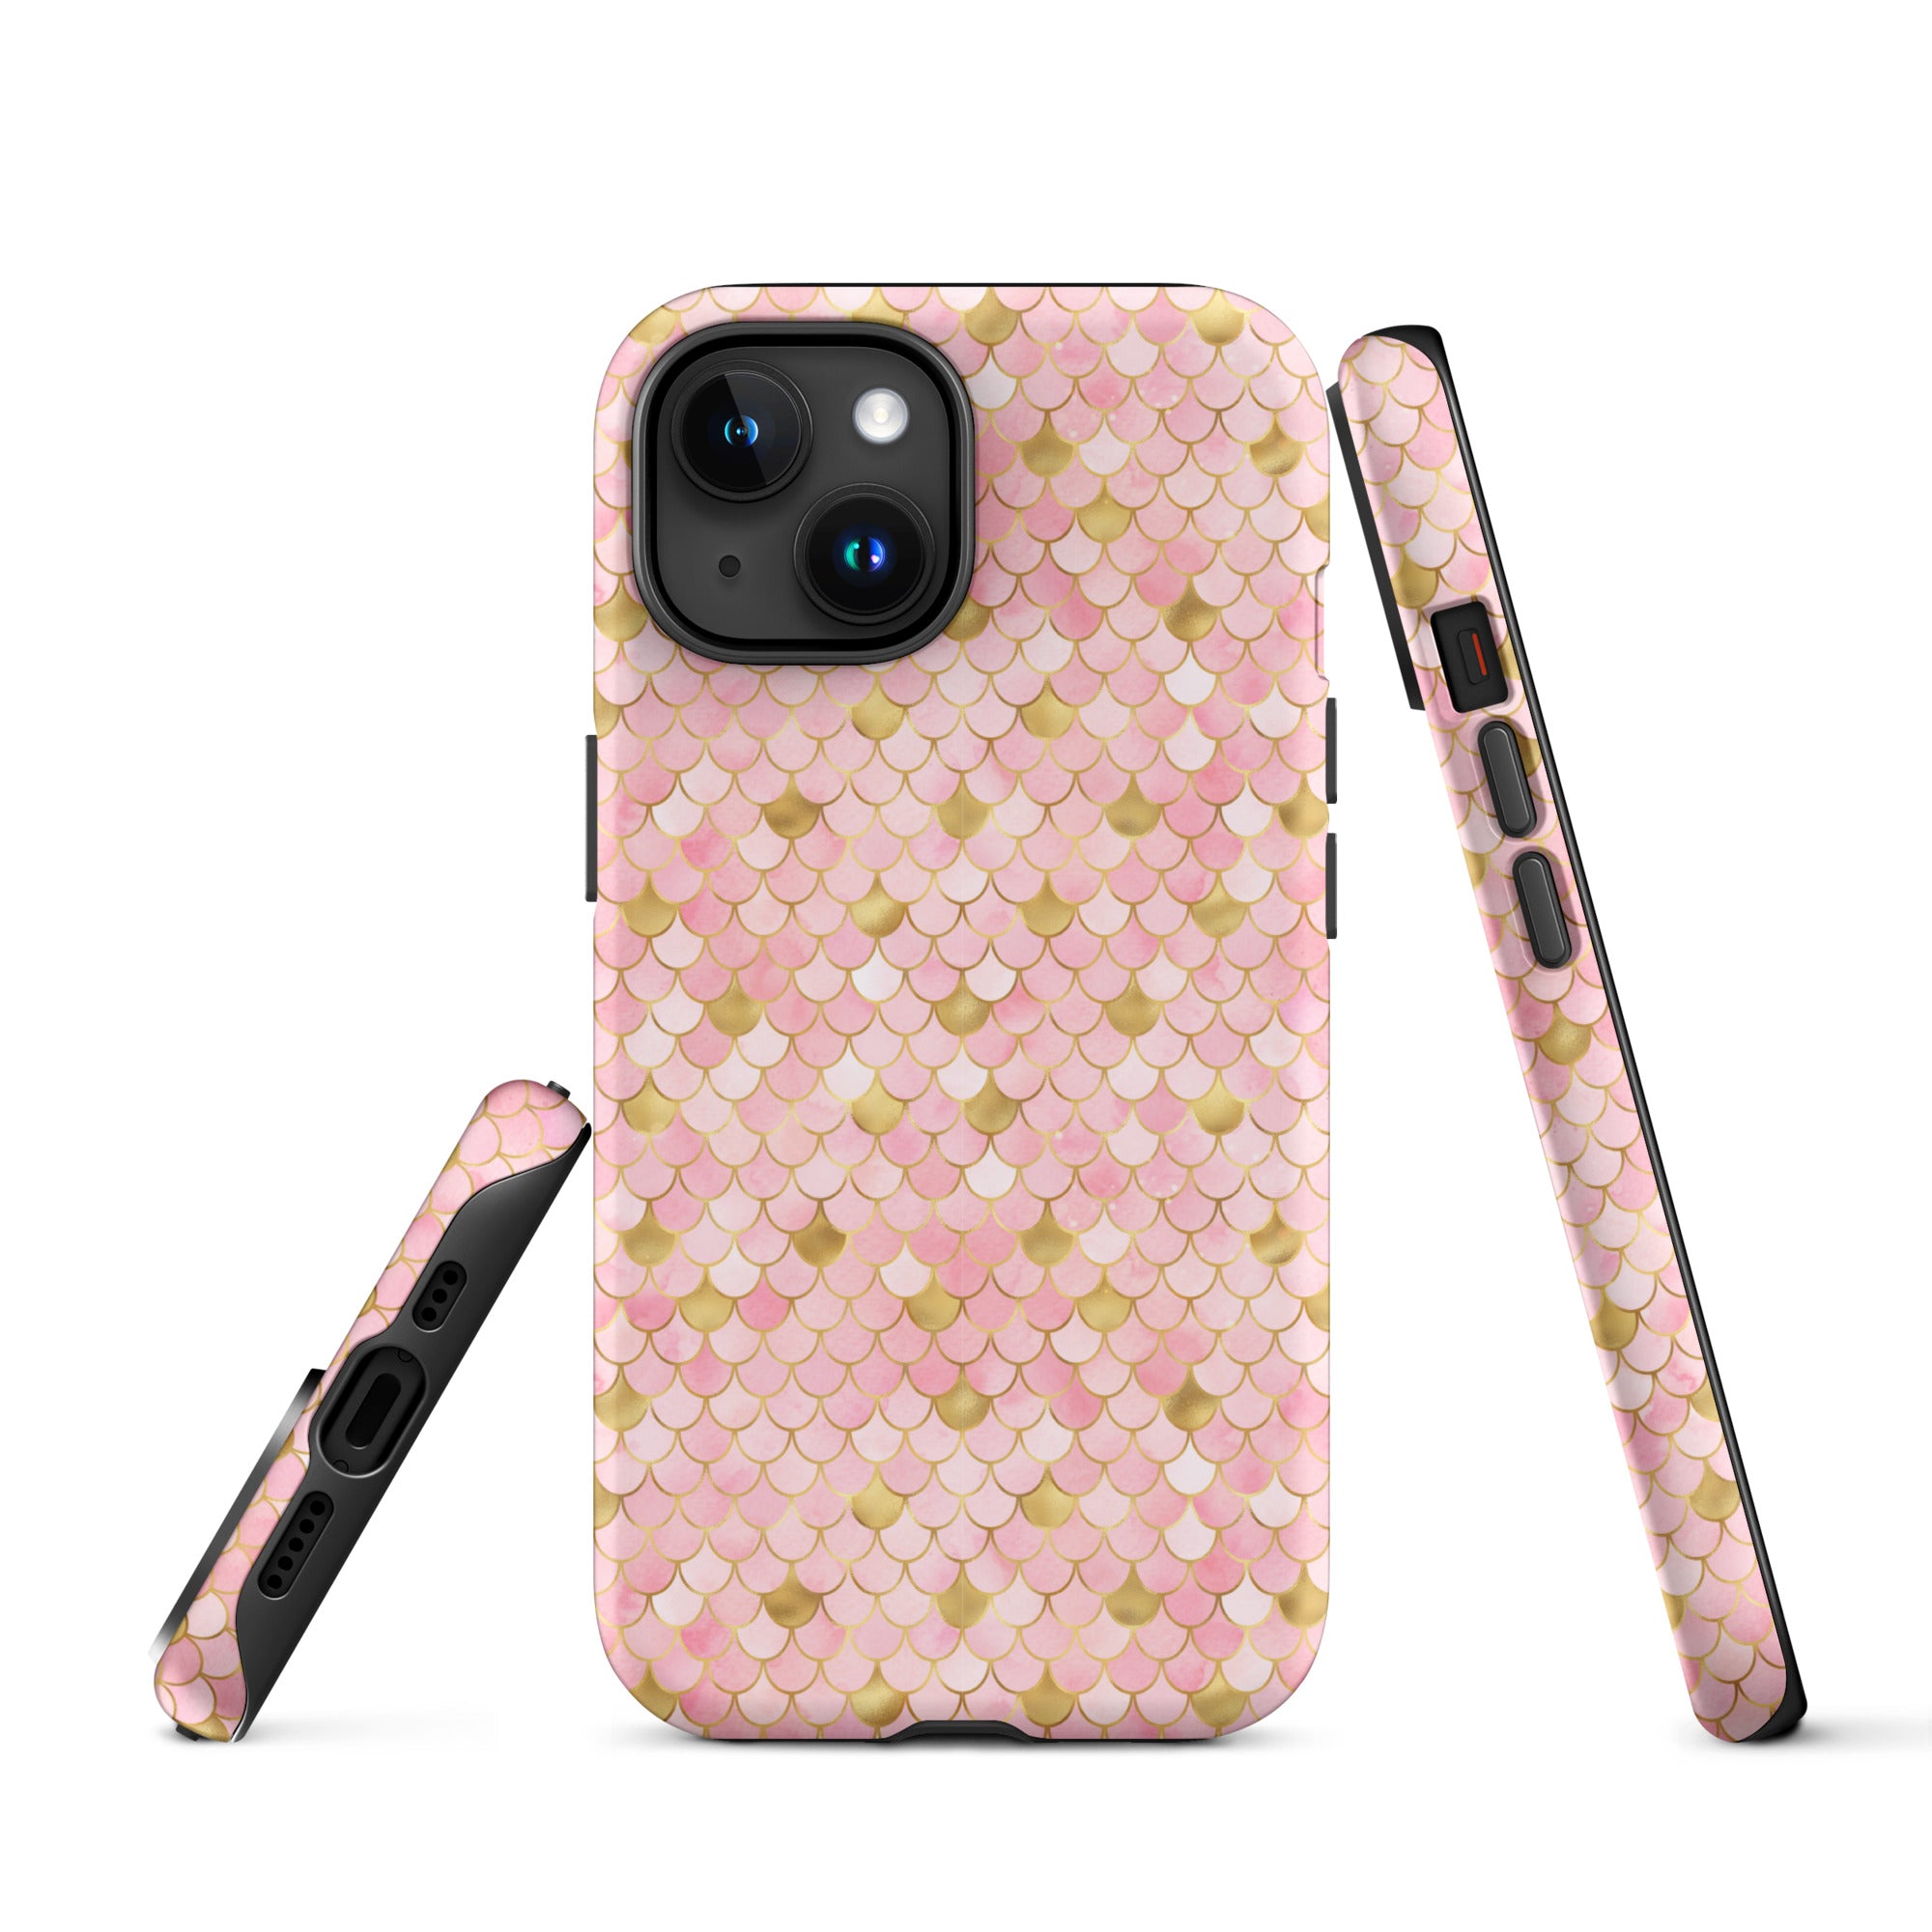 Tough Case for iPhone®- Mermaid Skin Pink